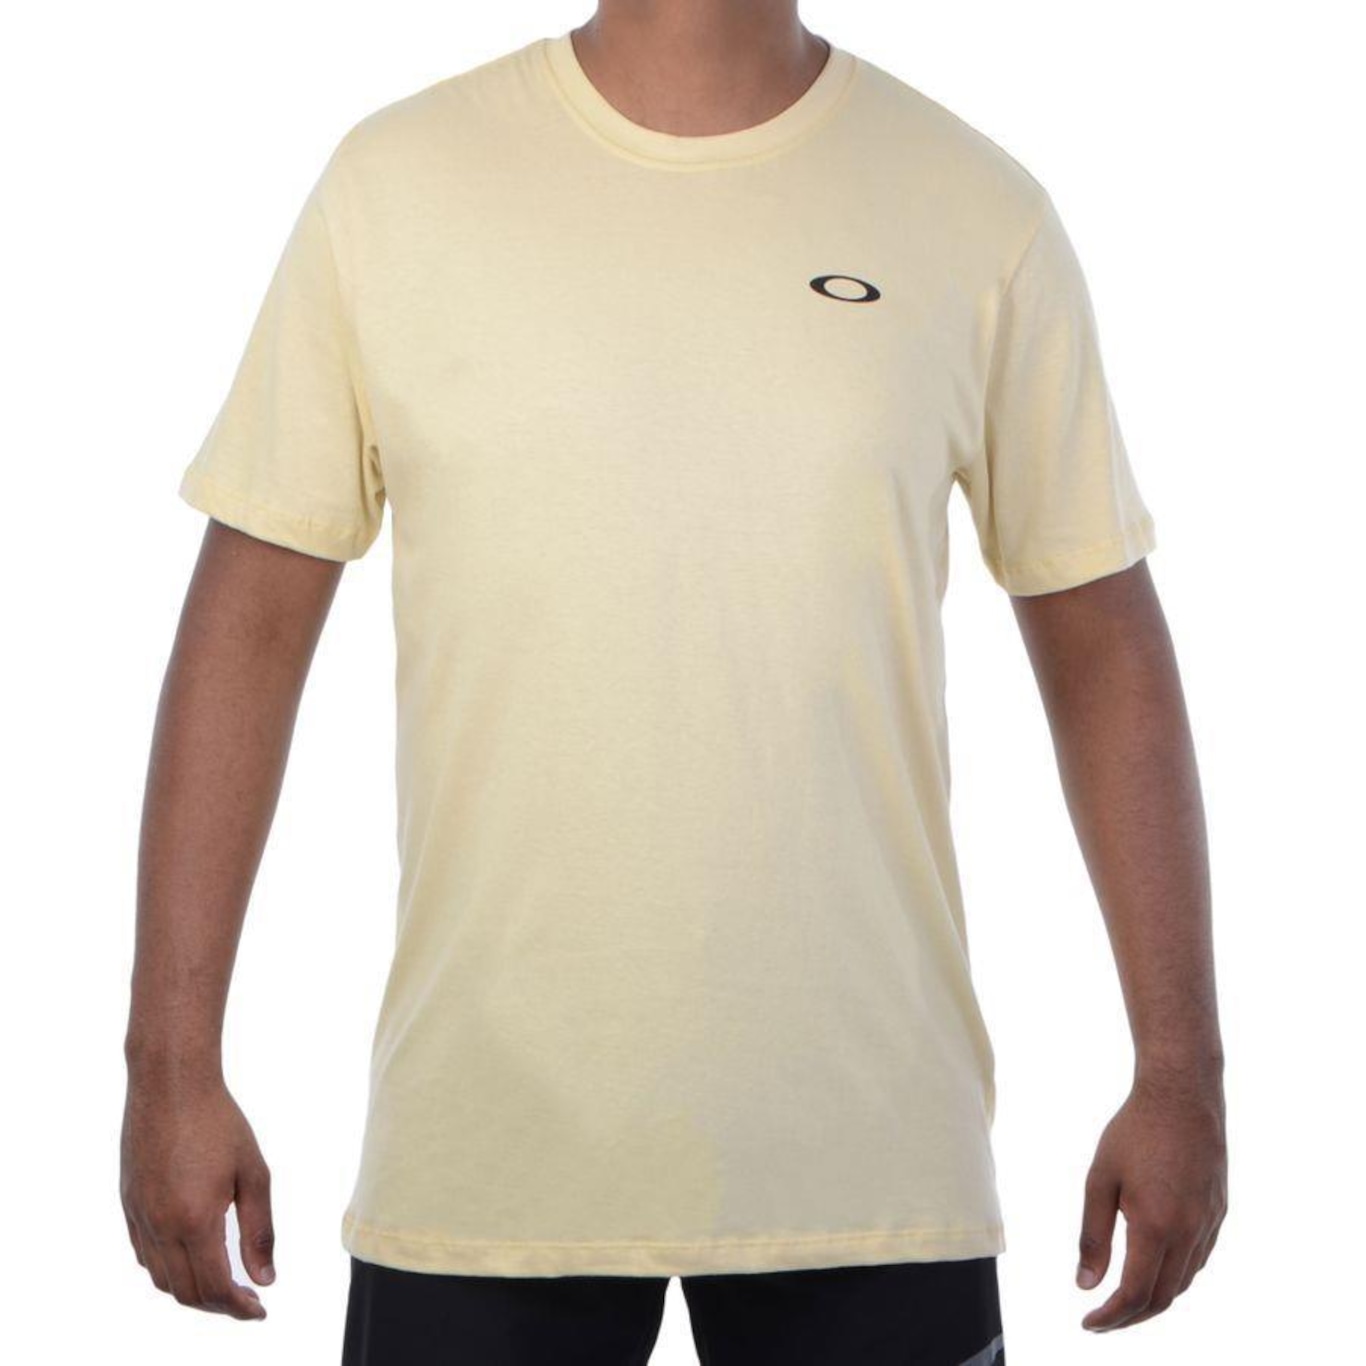 Camiseta oakley masculina O ellipse tee branca em Promoção na Americanas